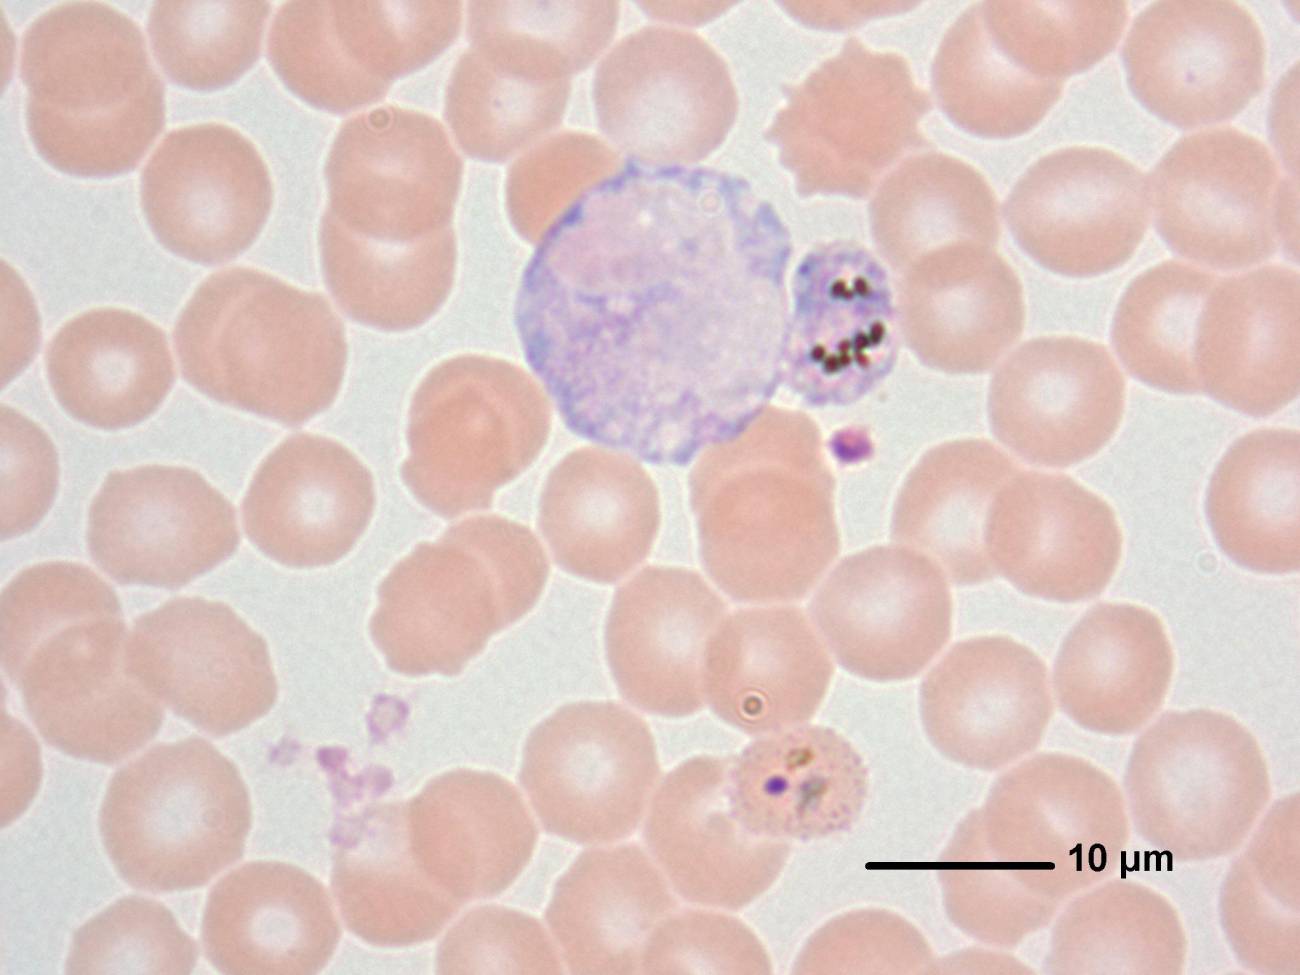 Plasmodium y glóbulos rojos